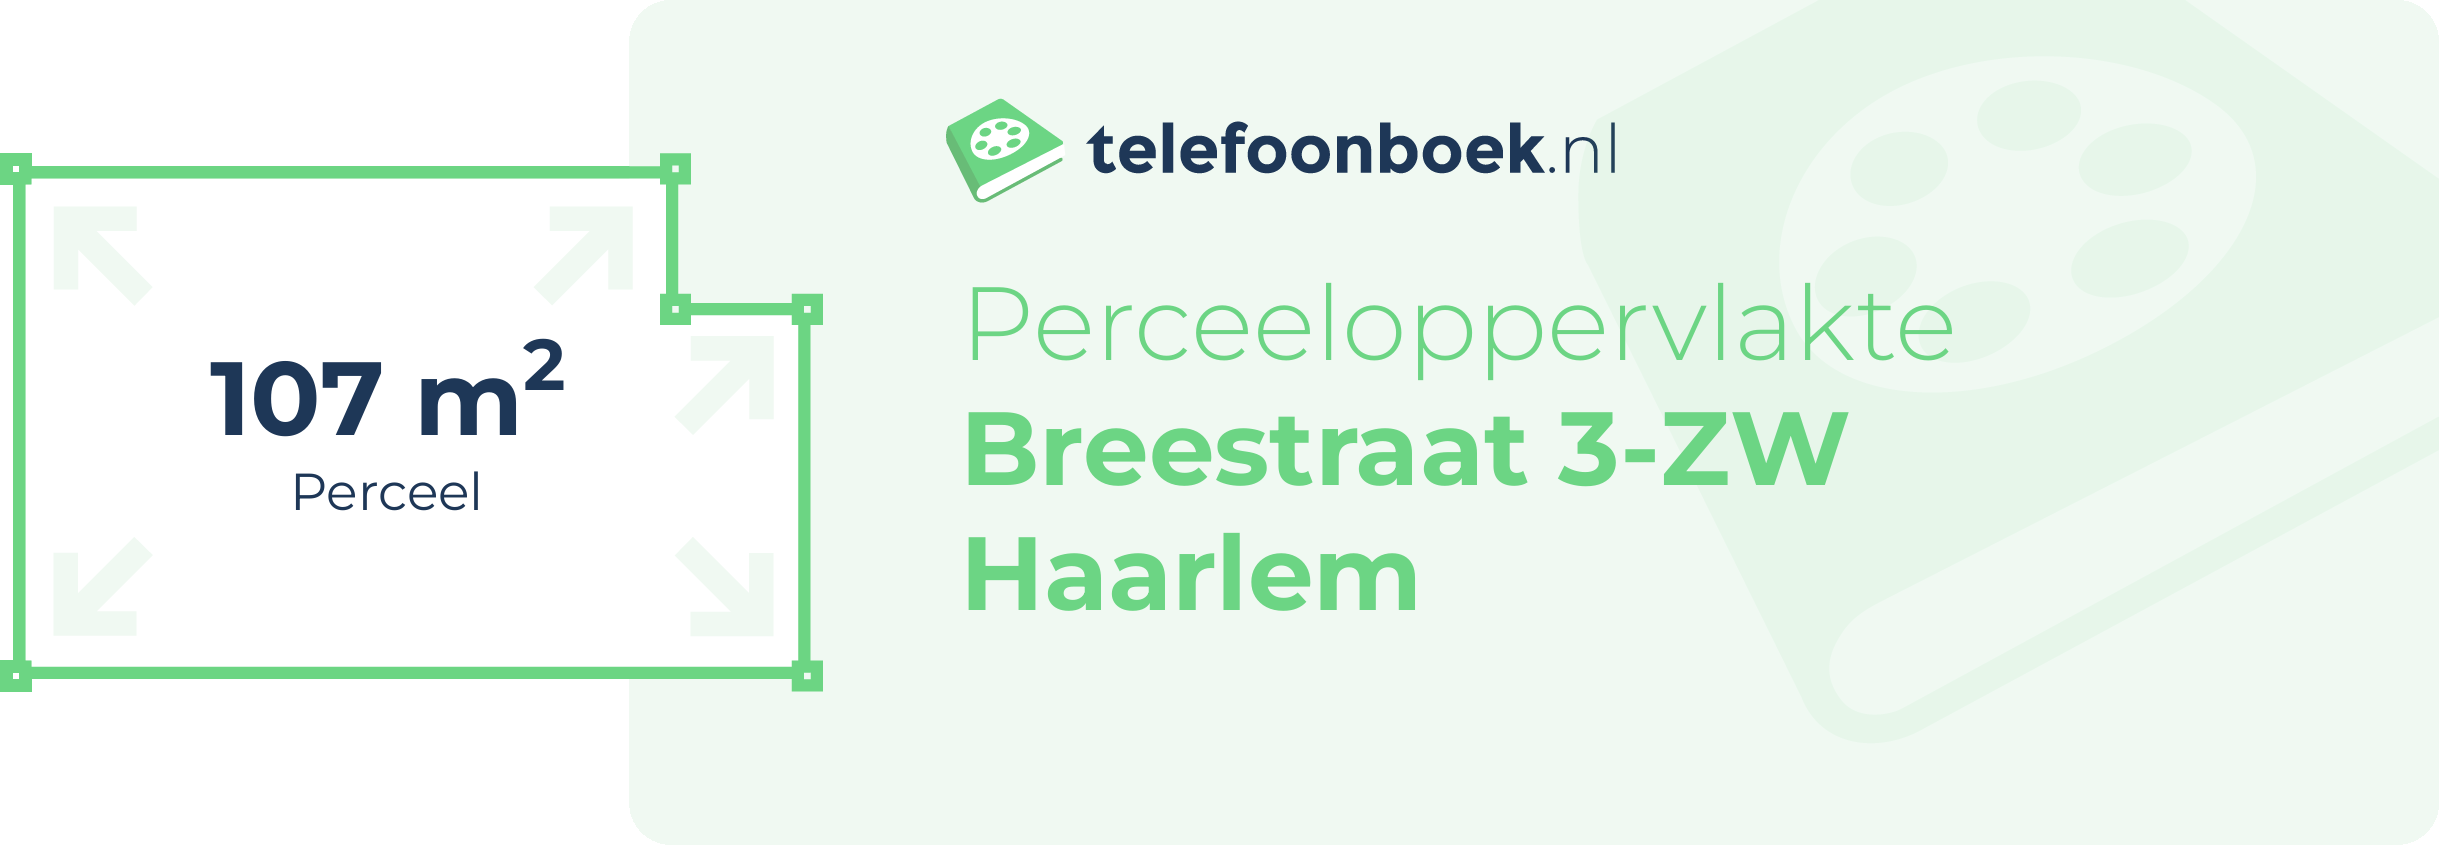 Perceeloppervlakte Breestraat 3-ZW Haarlem